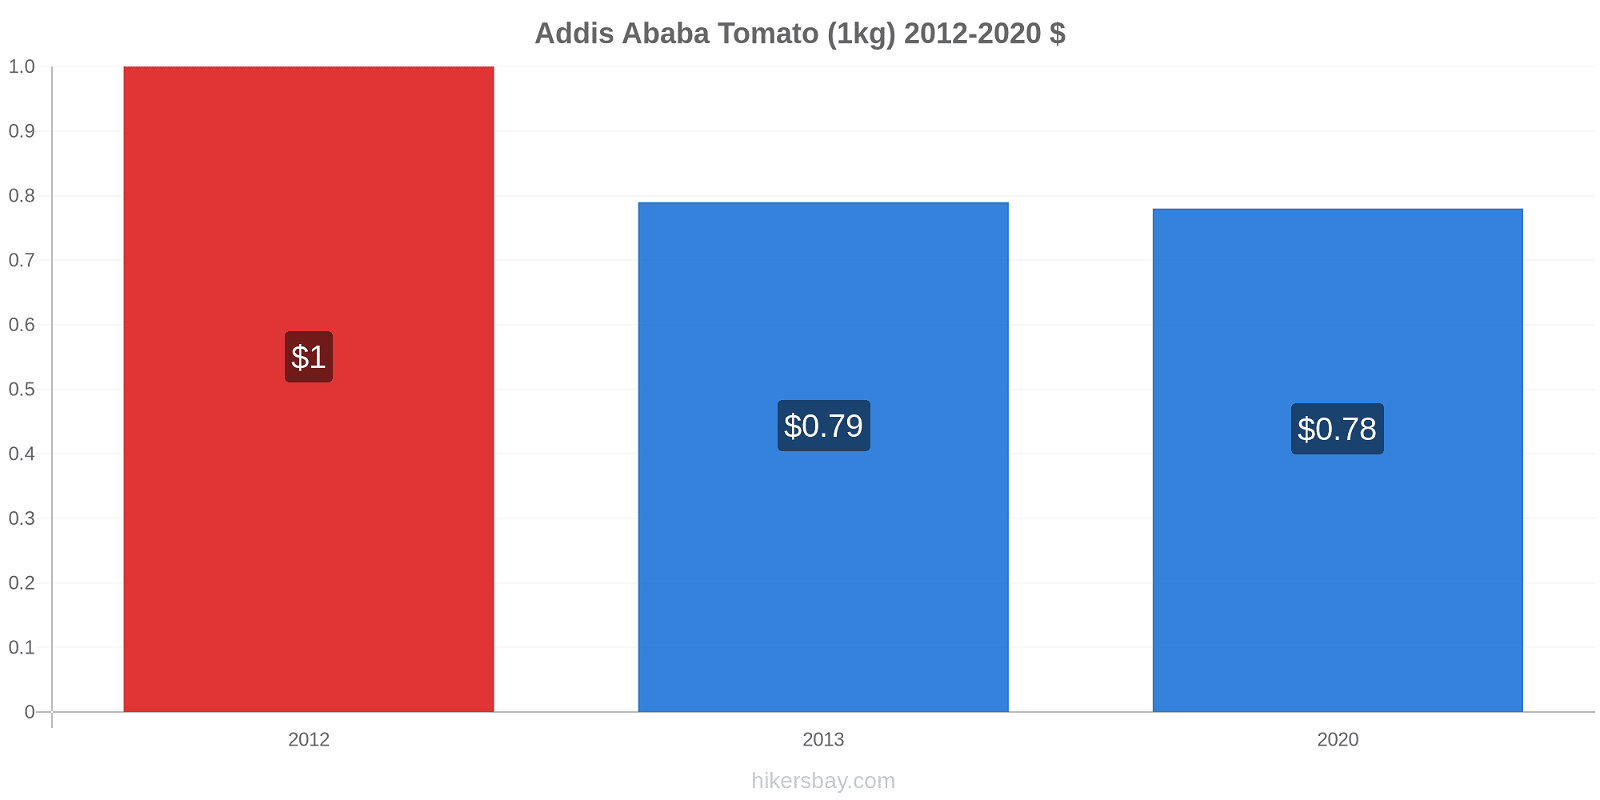 Addis Ababa price changes Tomato (1kg) hikersbay.com